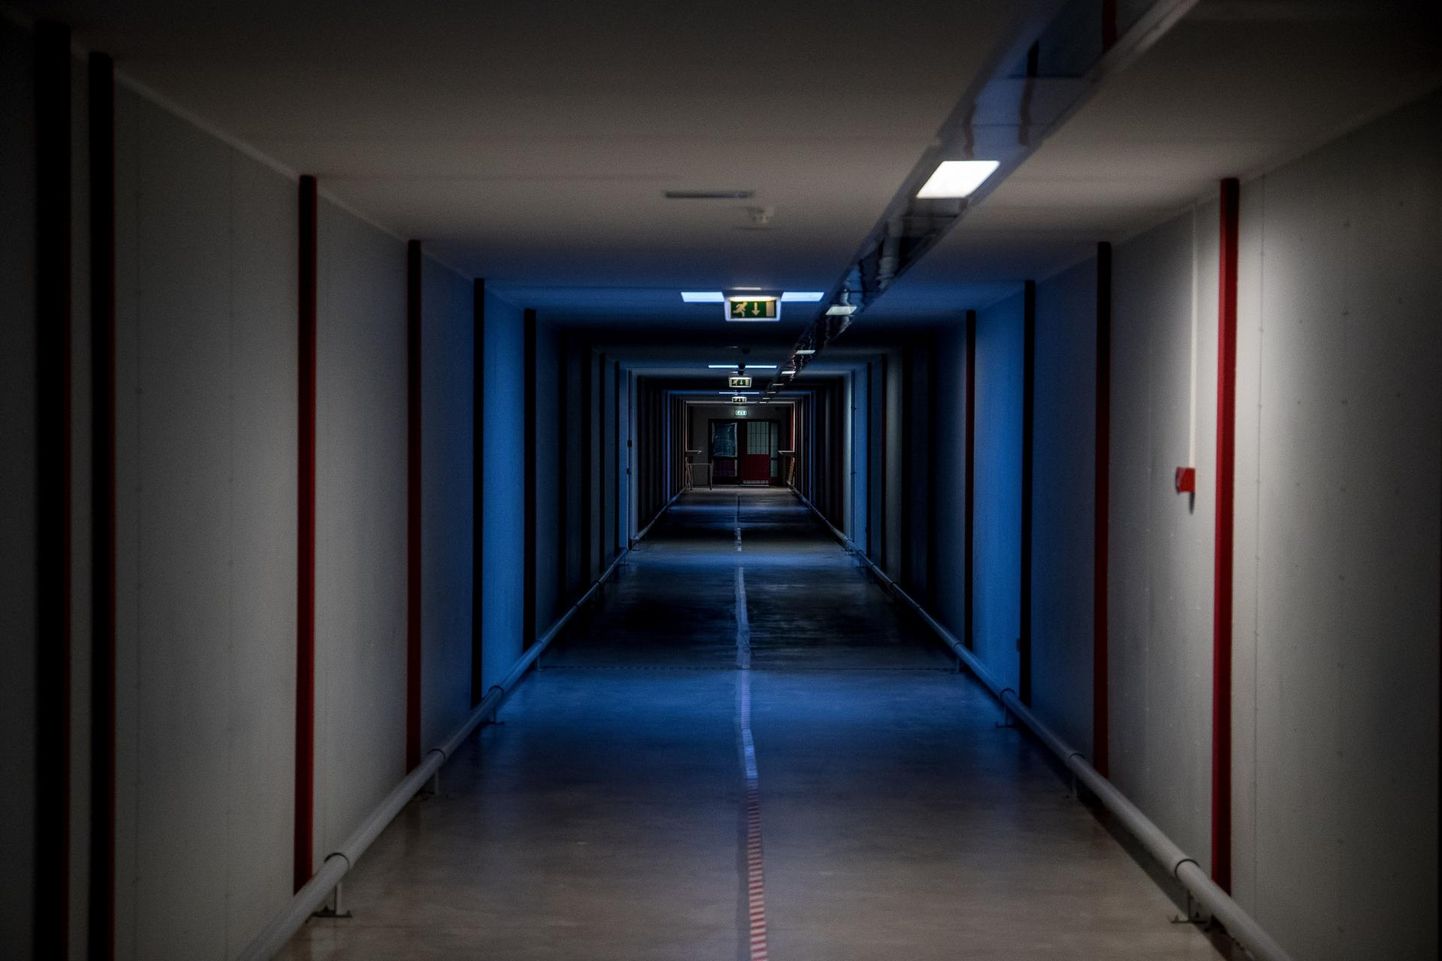 Viru vangla koridorides valitseb vaikus. Isolatsioon on maksimaalne. 